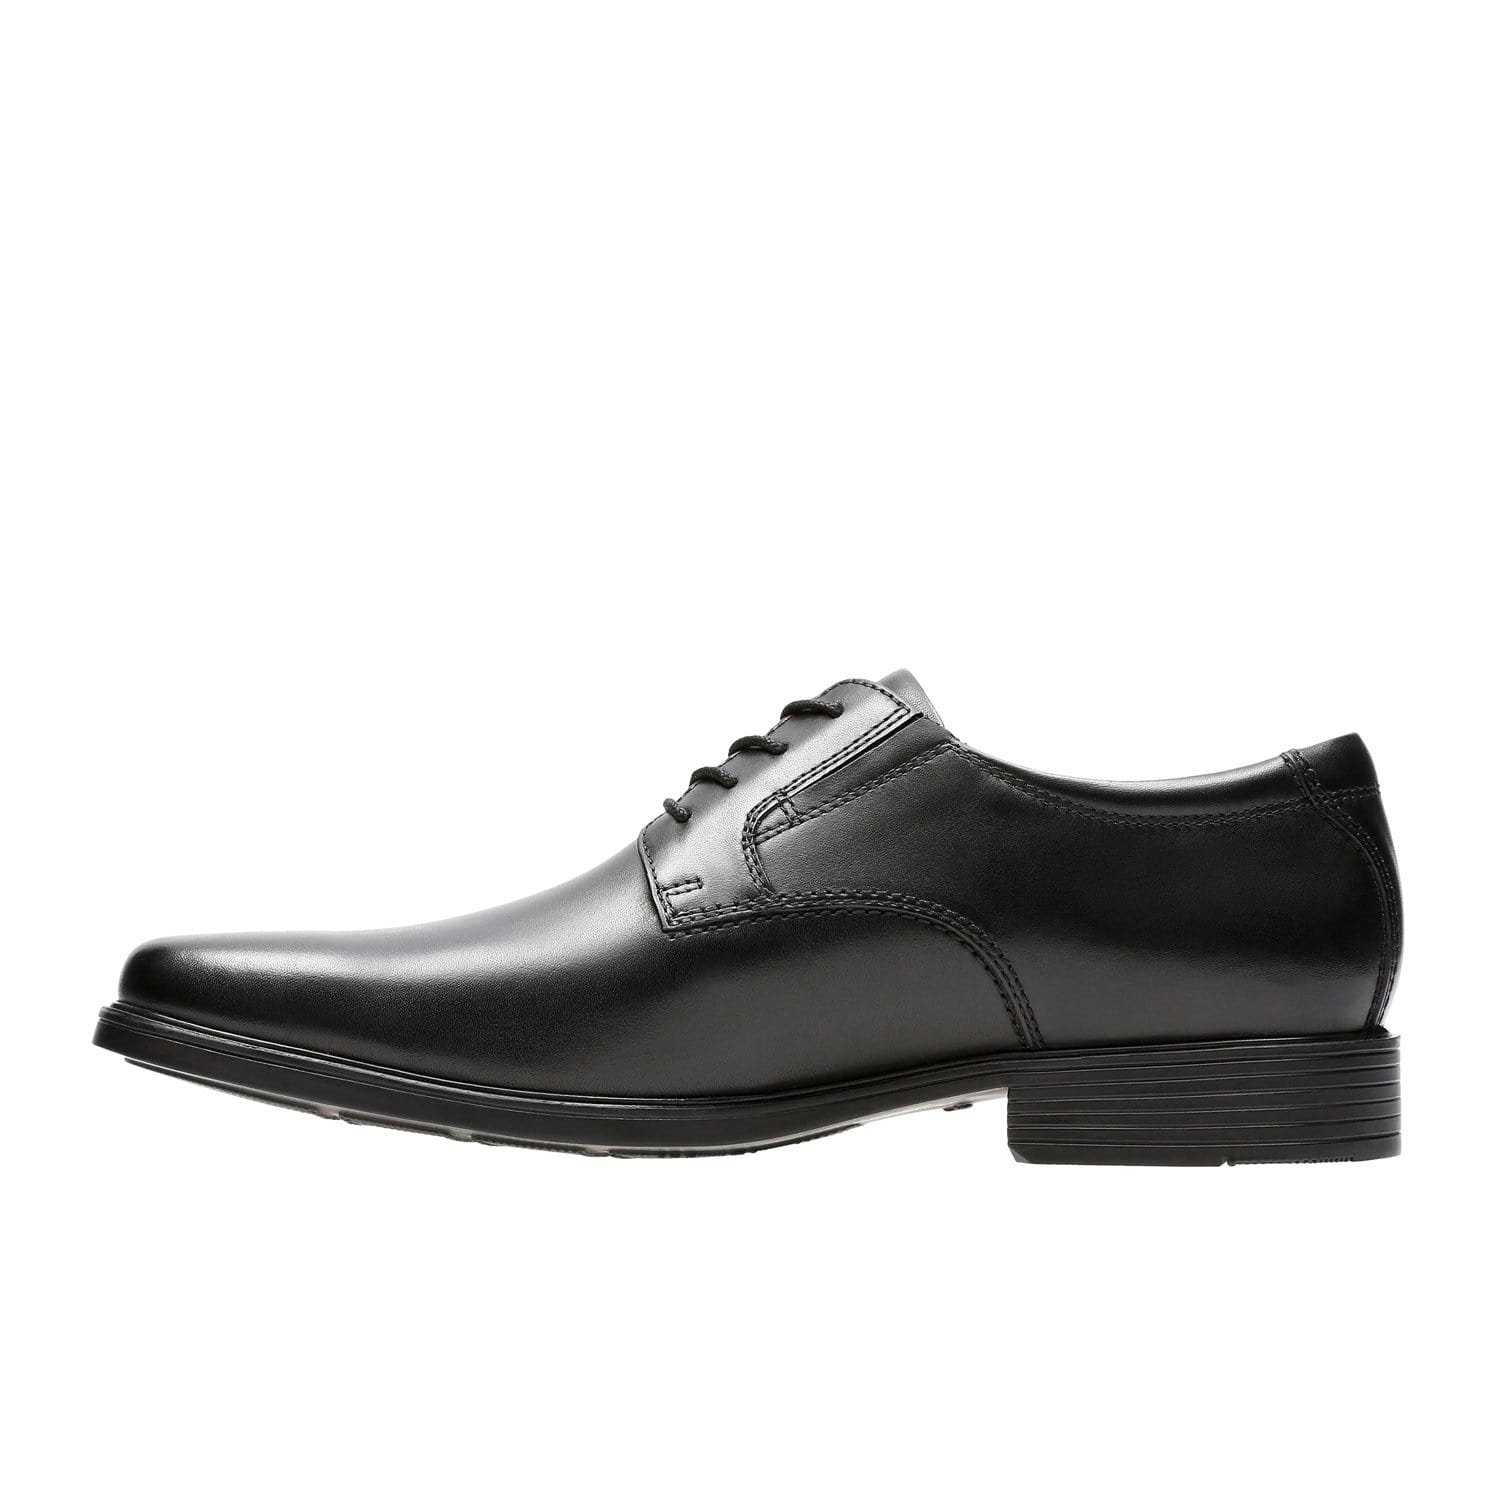 clarks-tilden-plain-shoes-black-leather-26110350-h-width-wide-fit